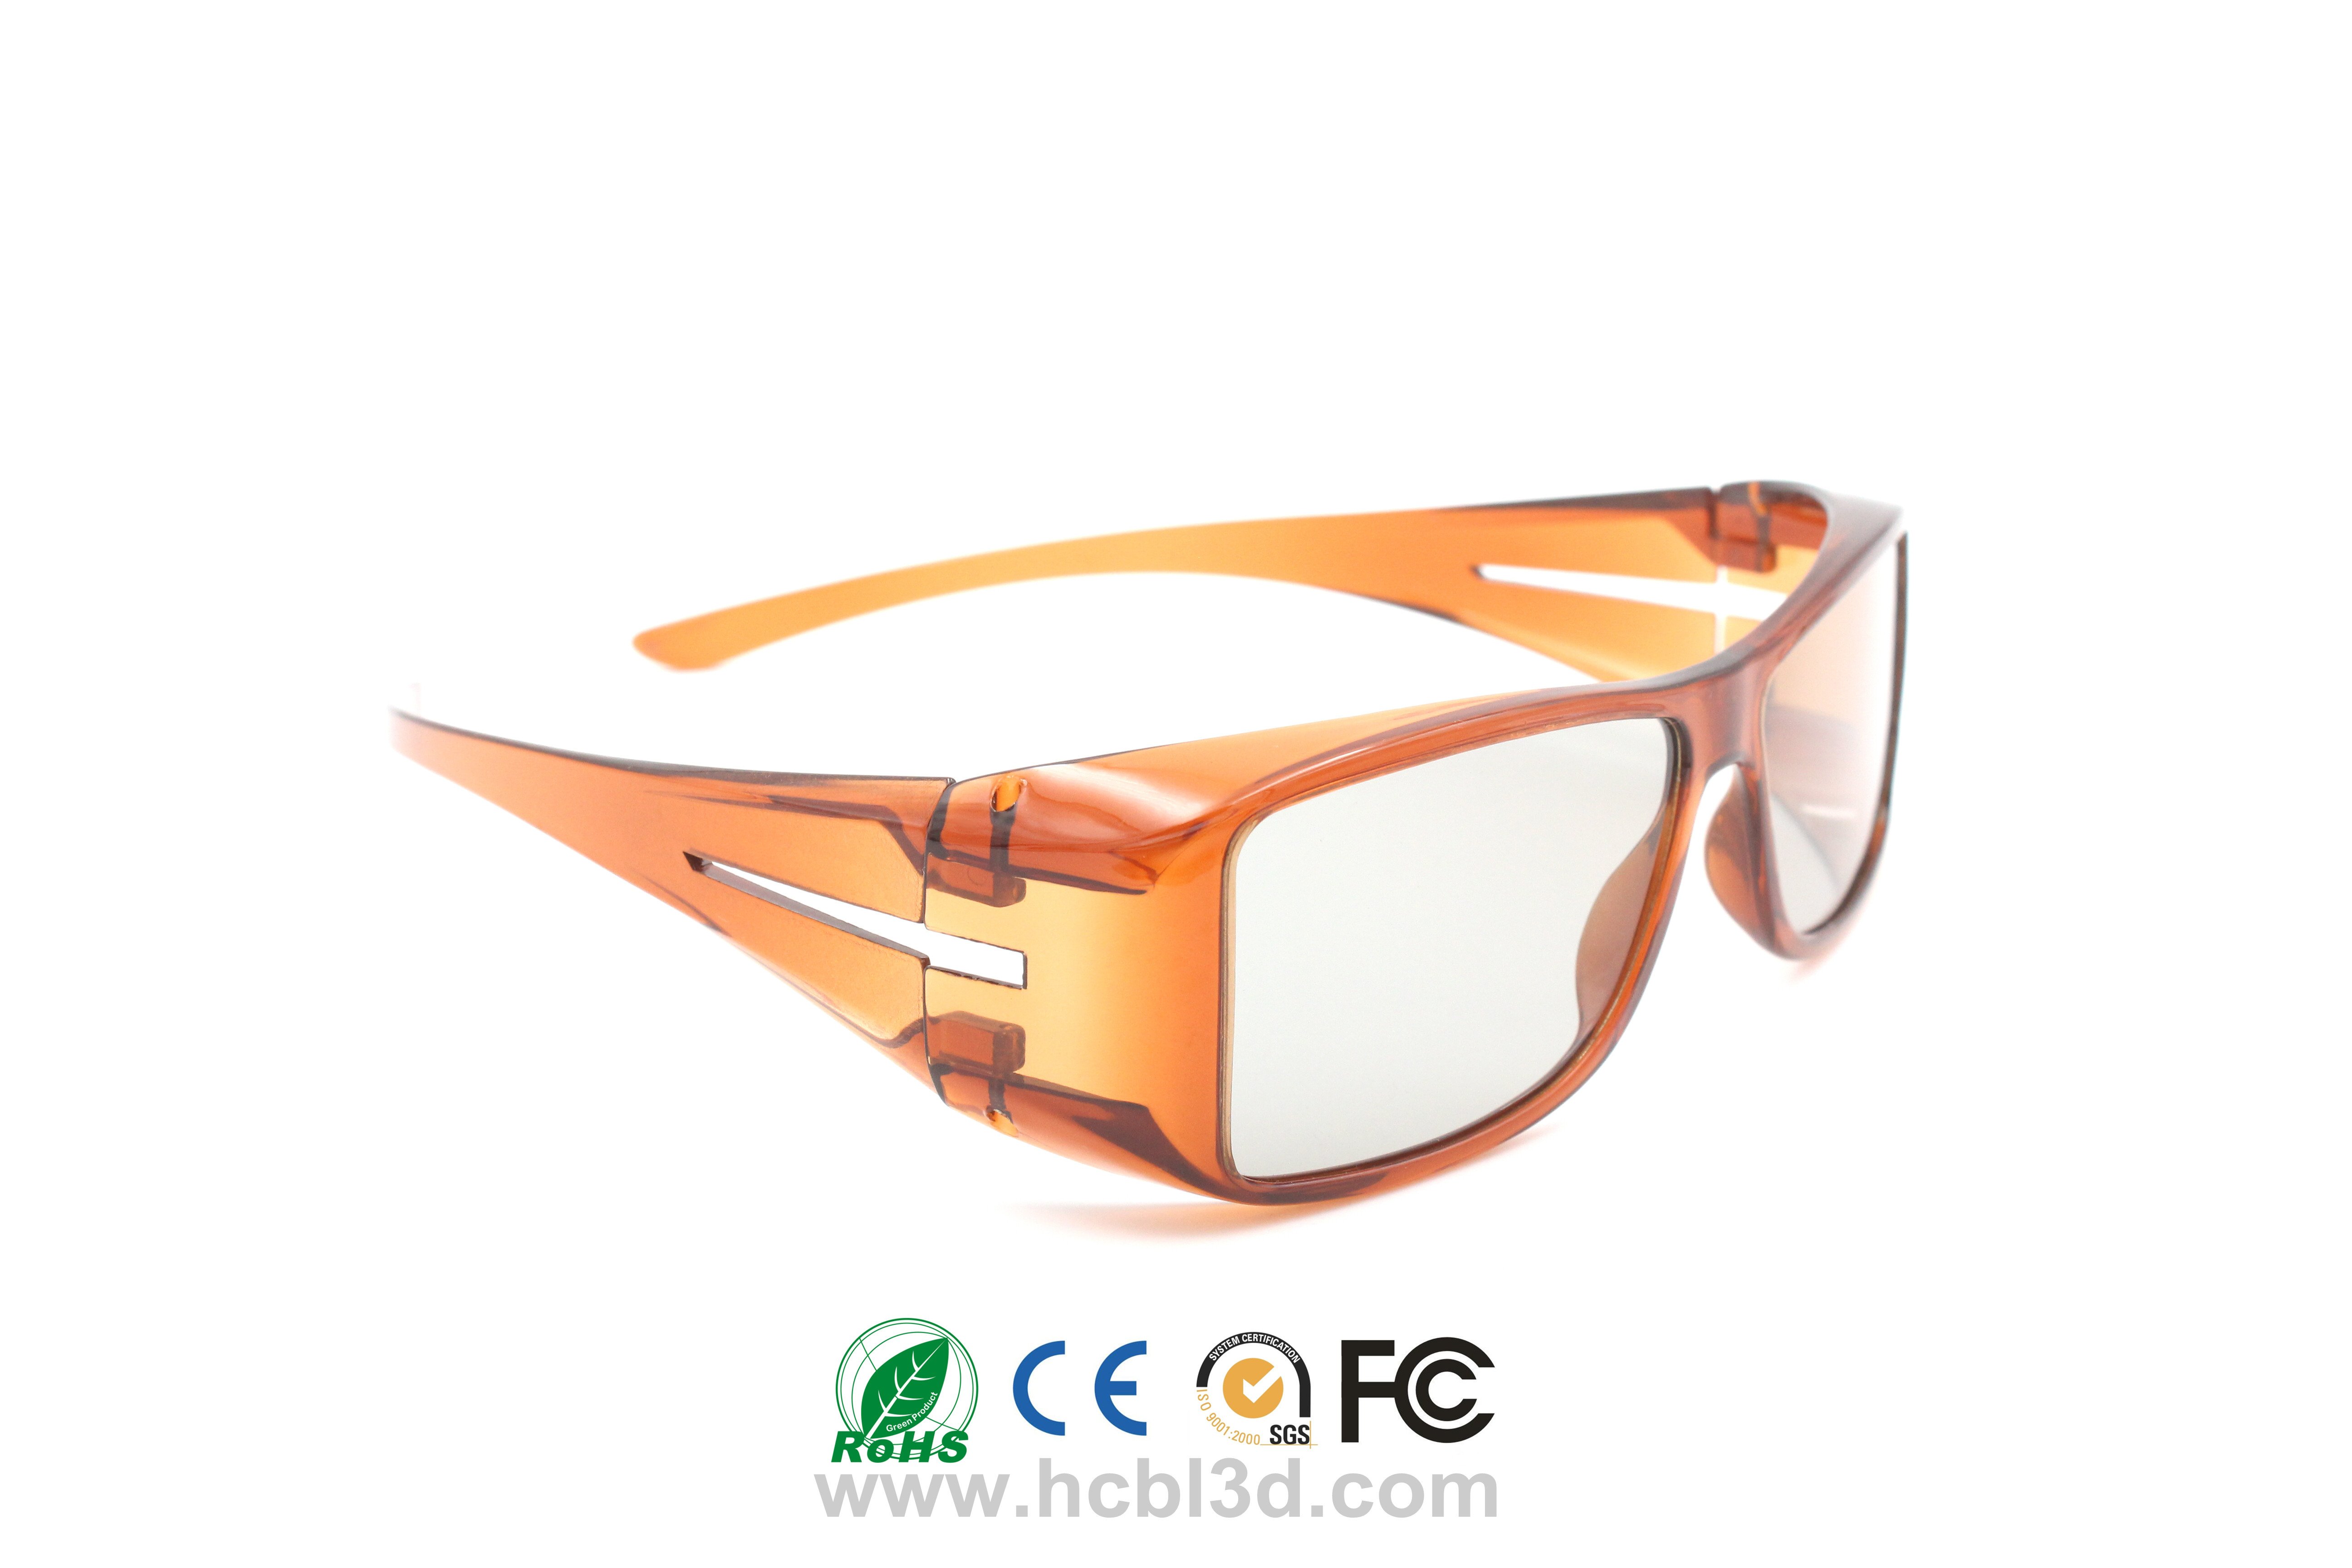 Reusable 3D Glasses Passive Polarized for 3D Movies